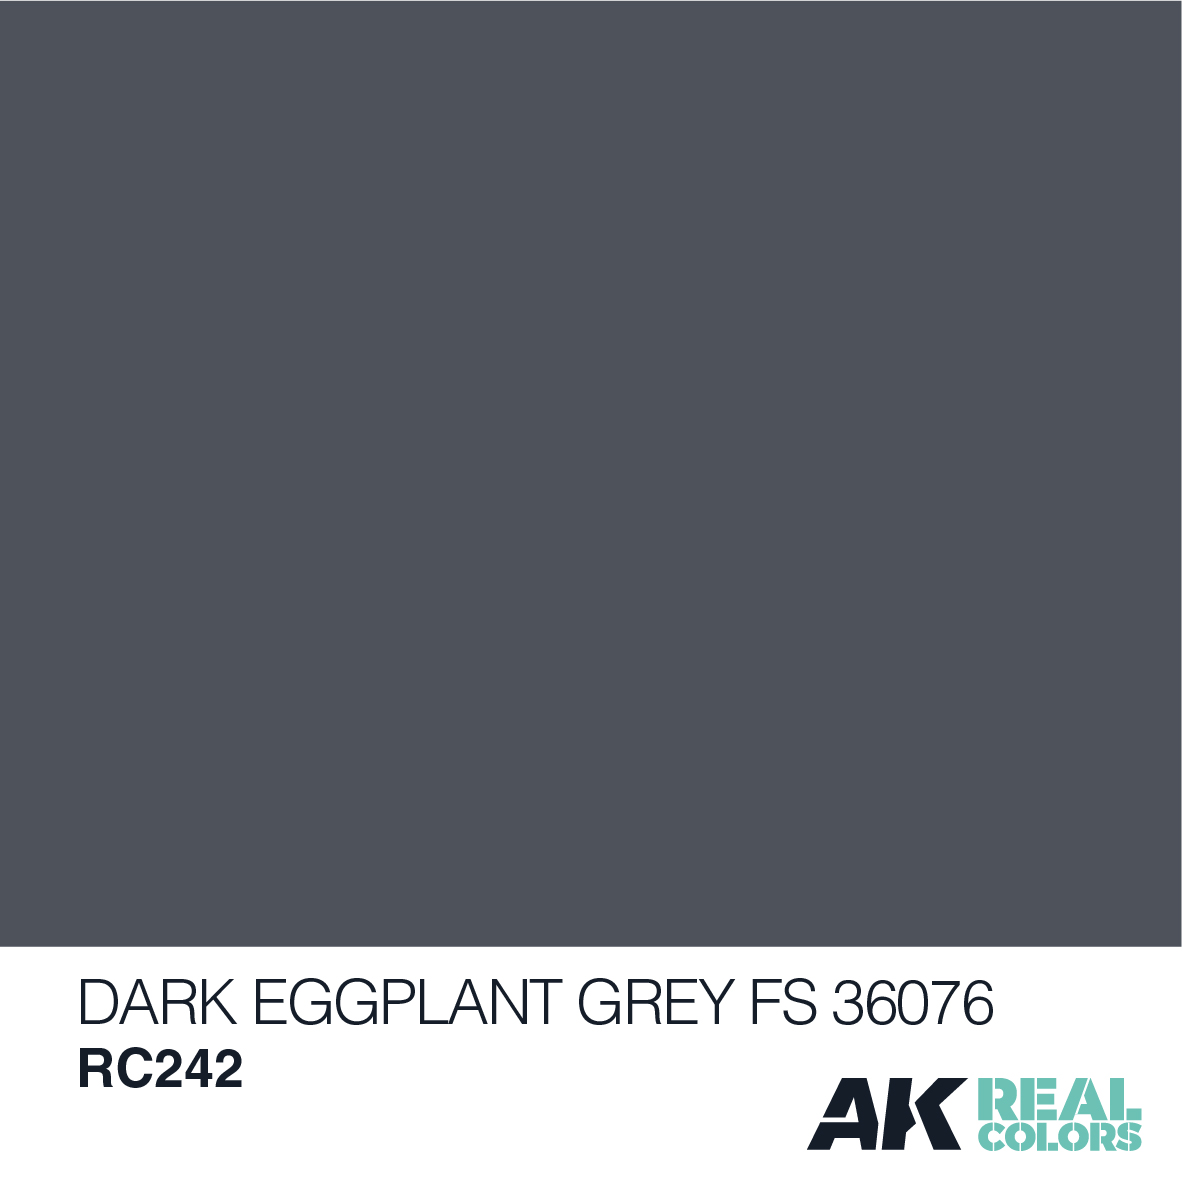 Dark Eggplant Grey FS 36076